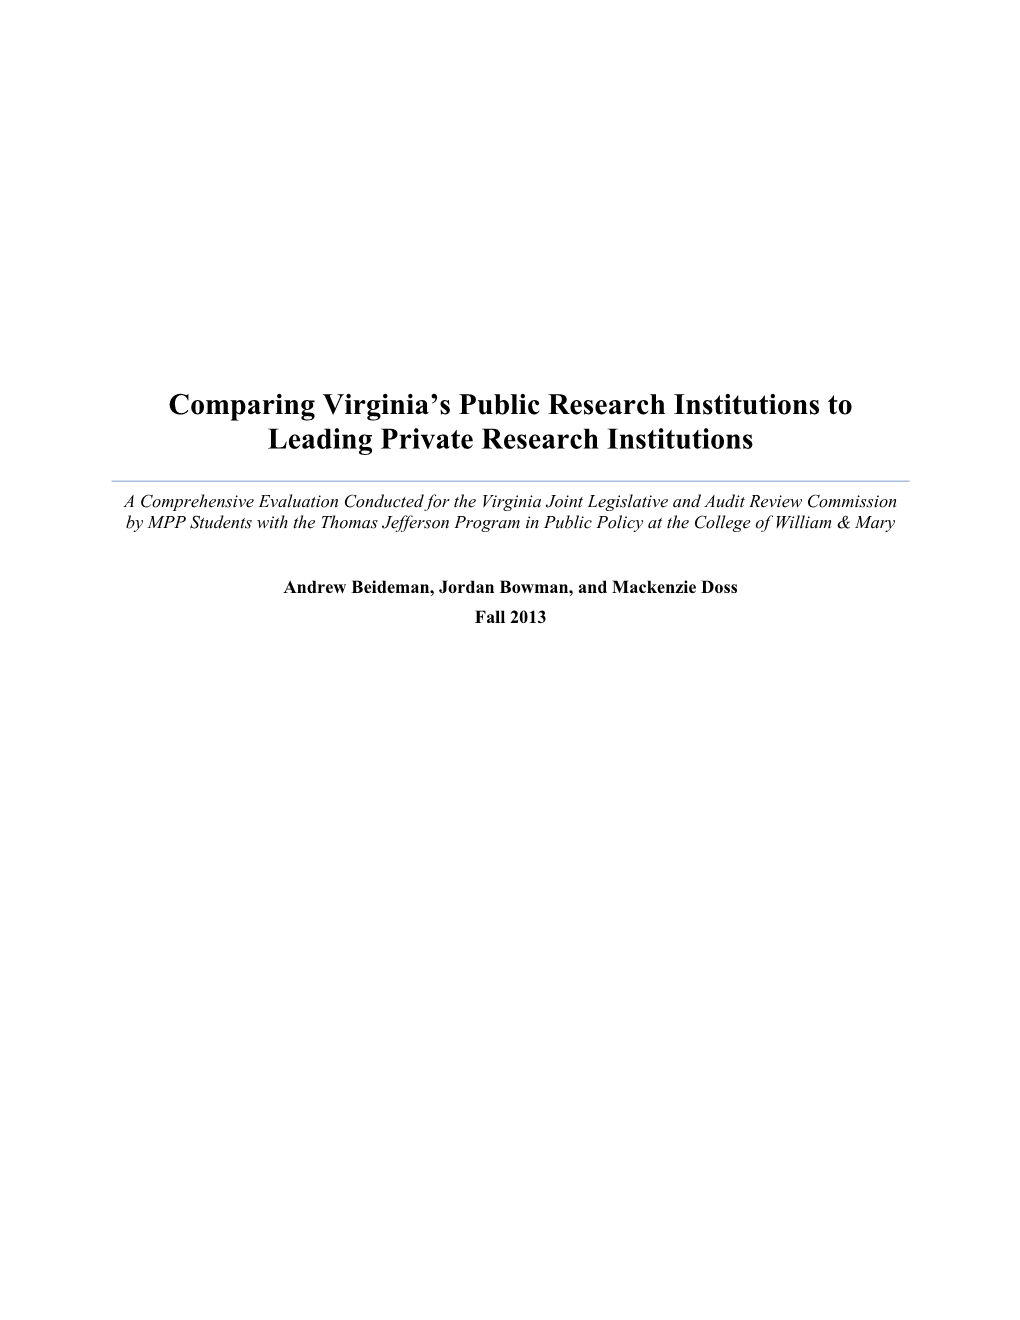 Comparing Virginia's Public Research Institutions to Leading Private Research Institutions